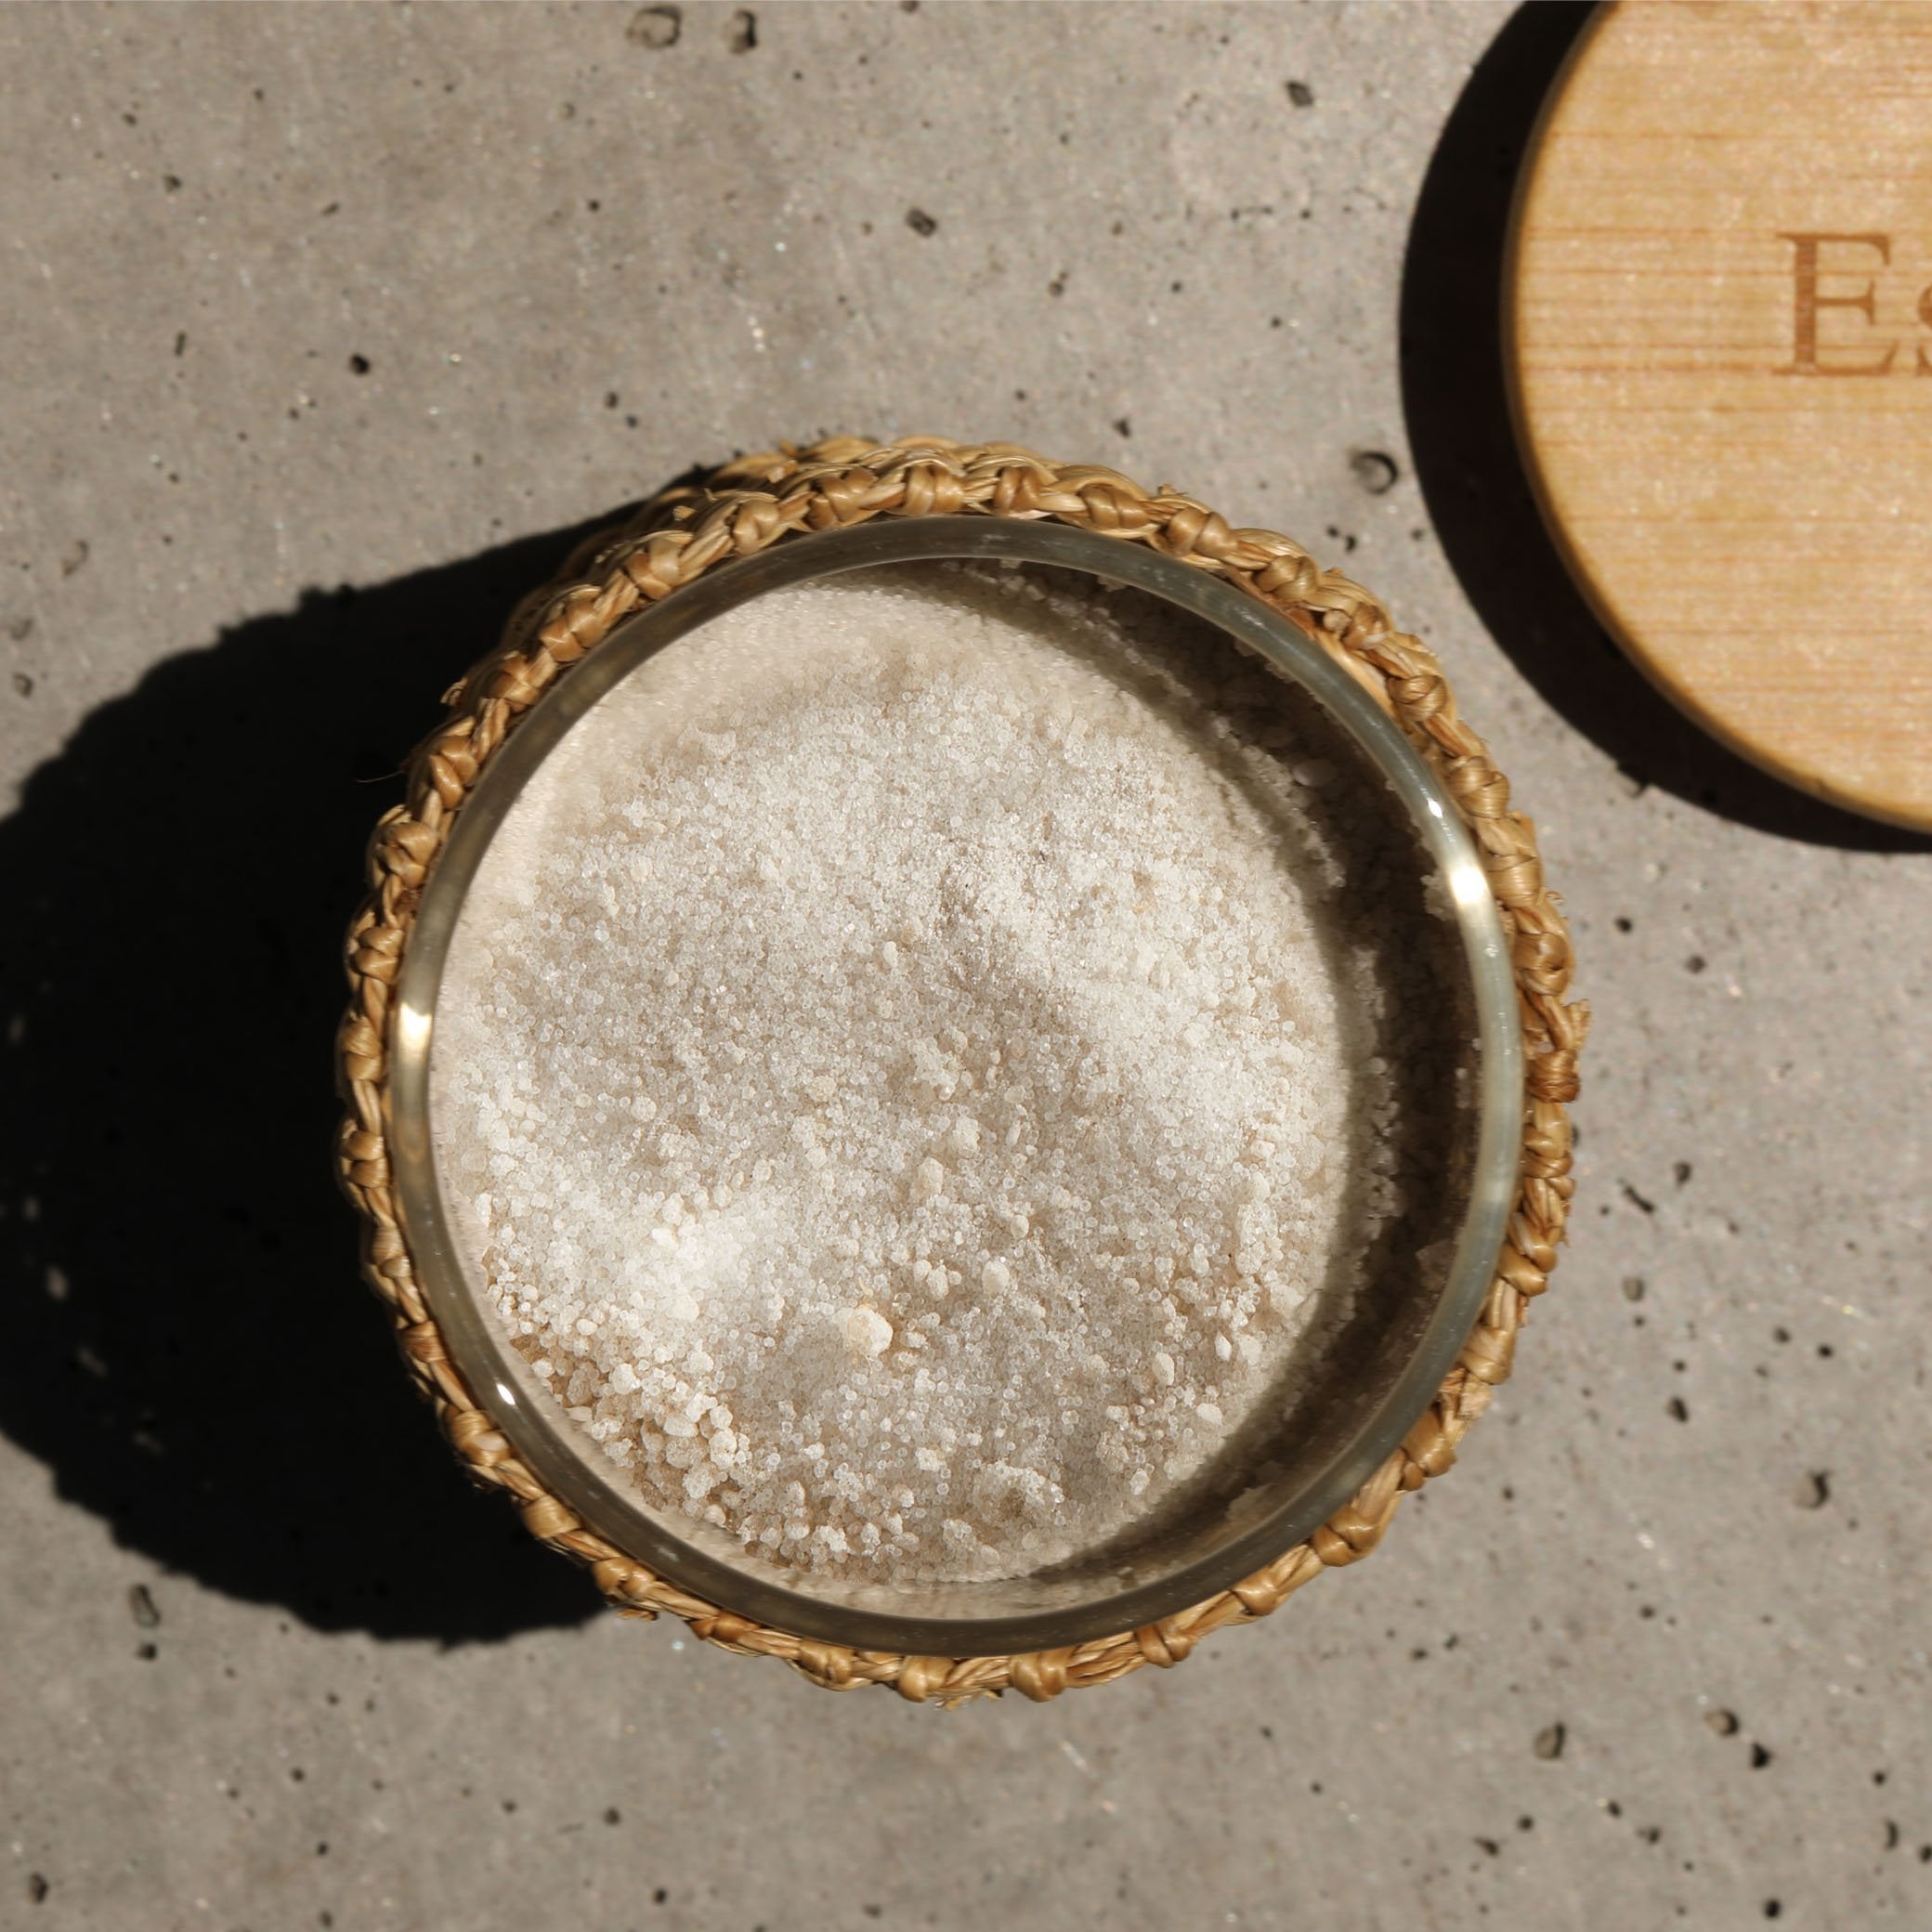  Sparkling Bath Salts by Esker Esker Perfumarie